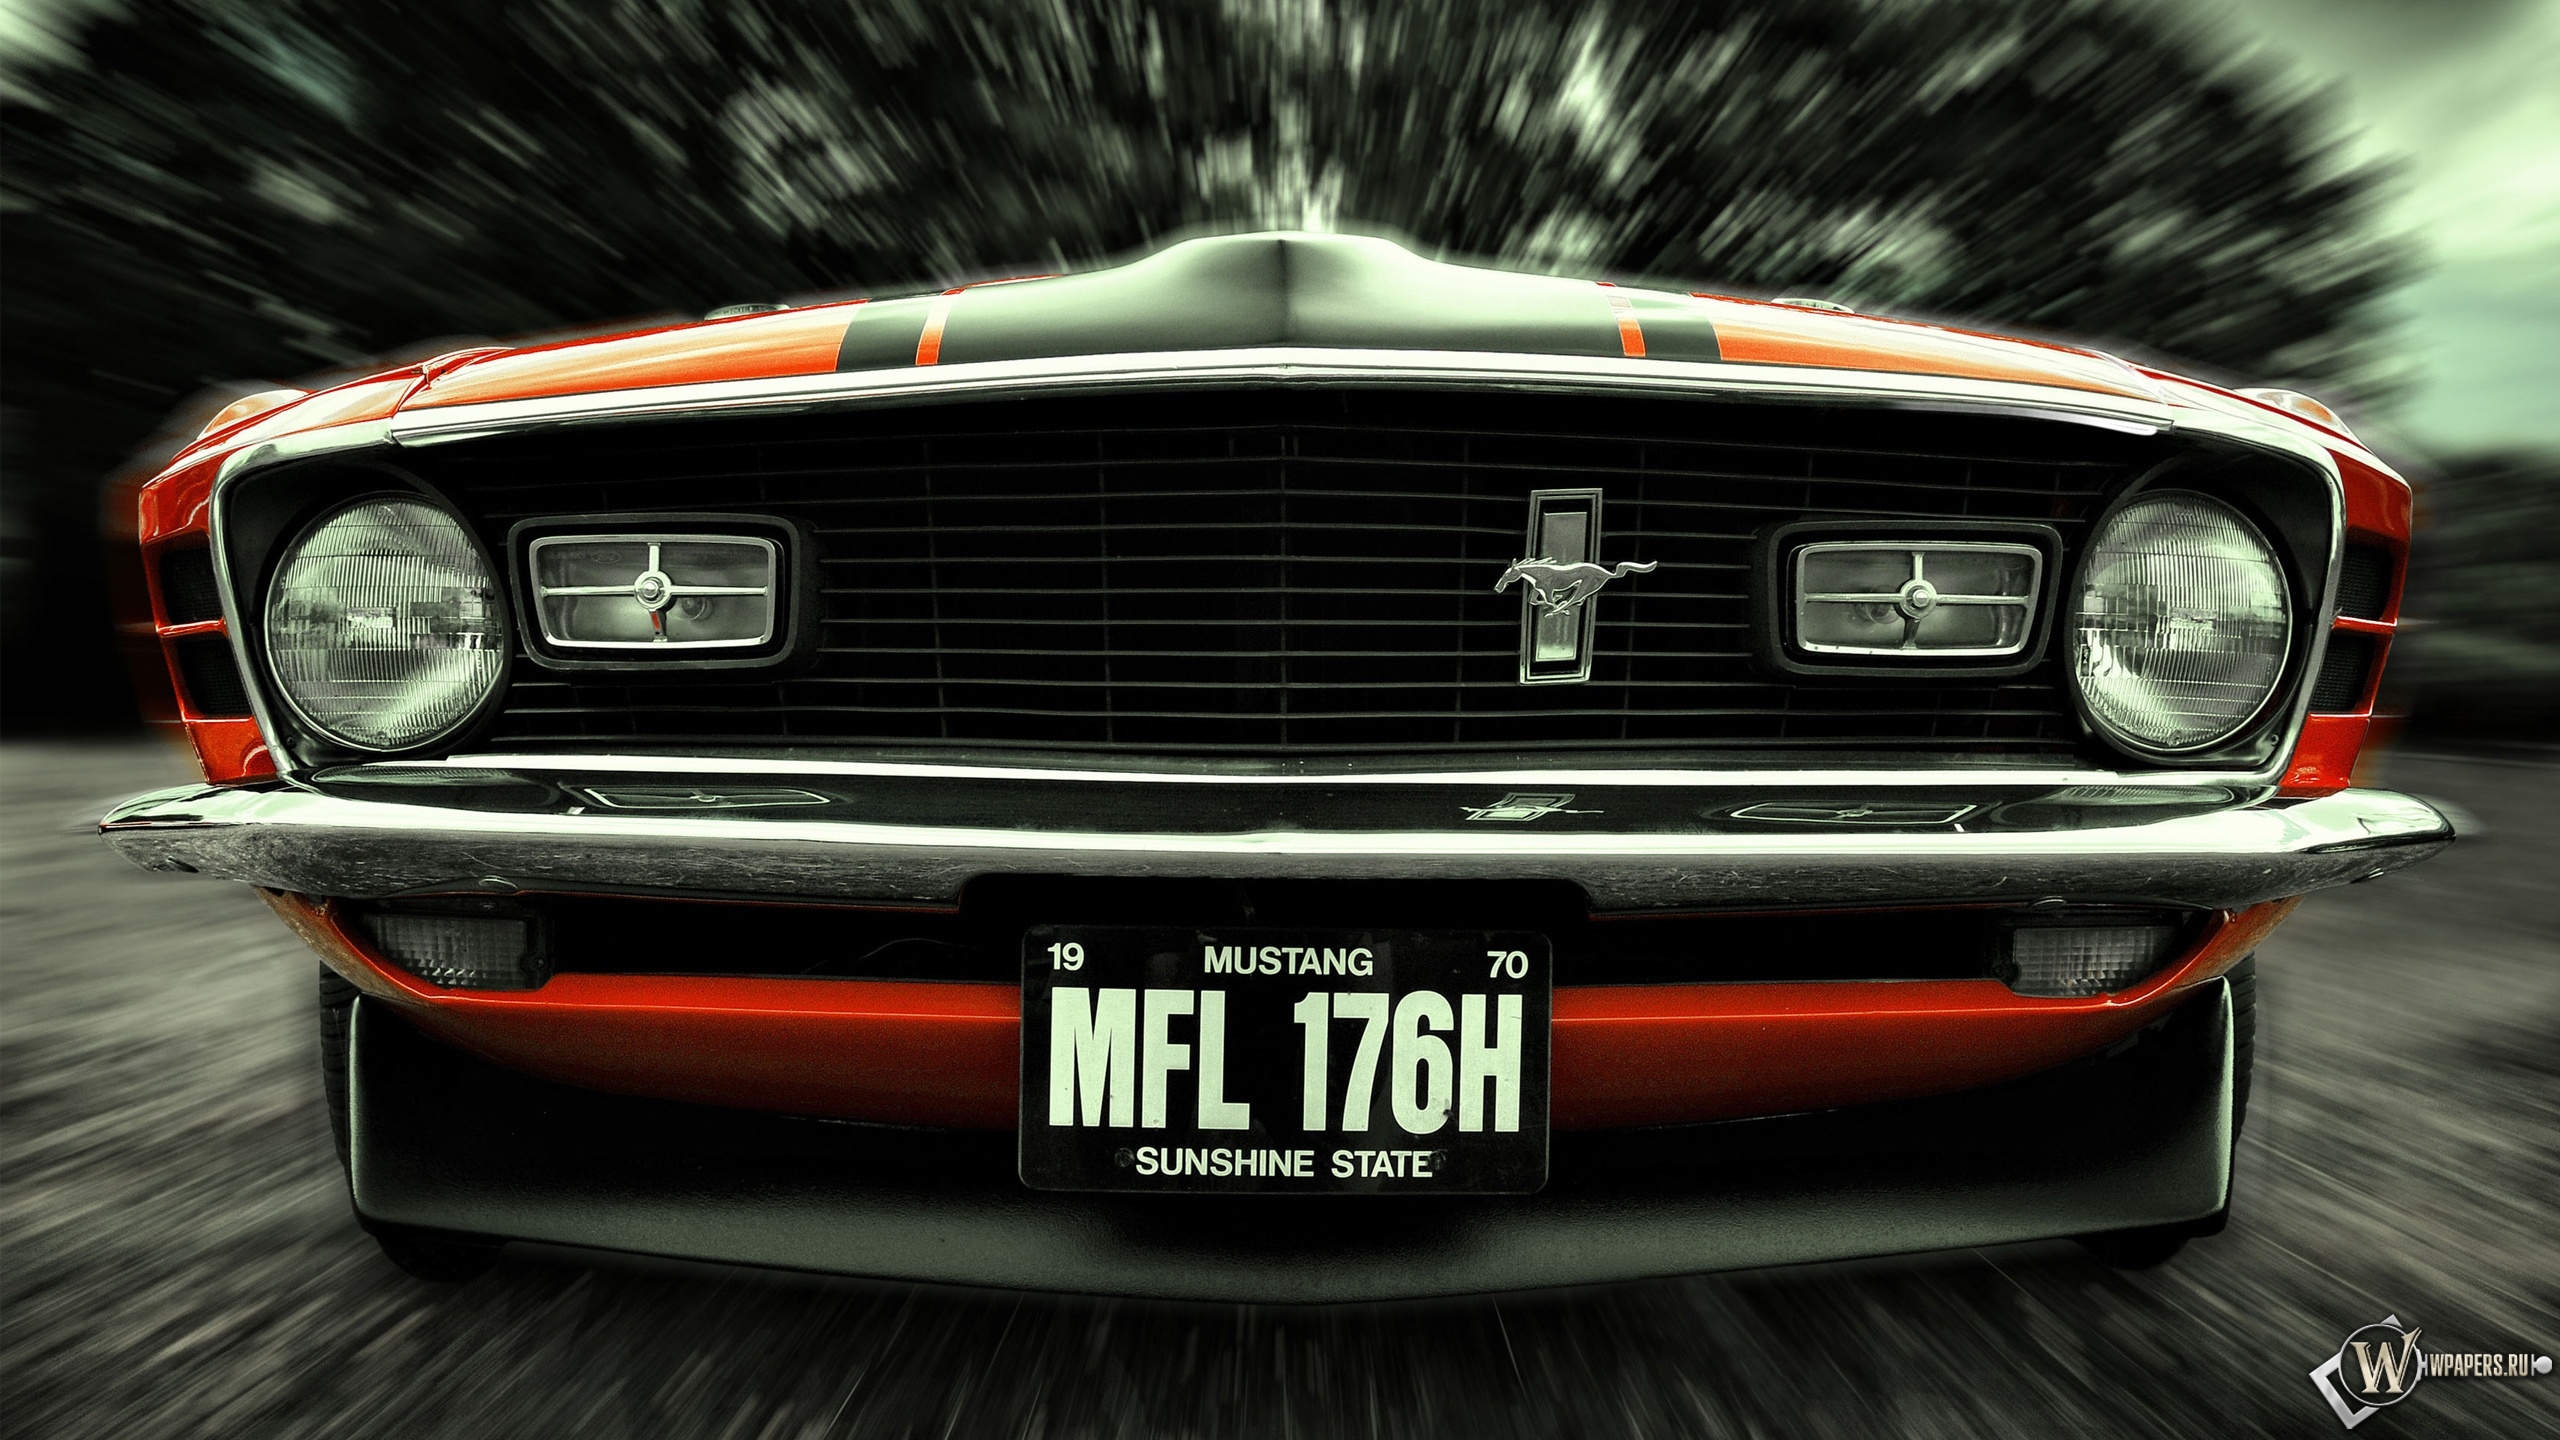 Mustang 2560x1440